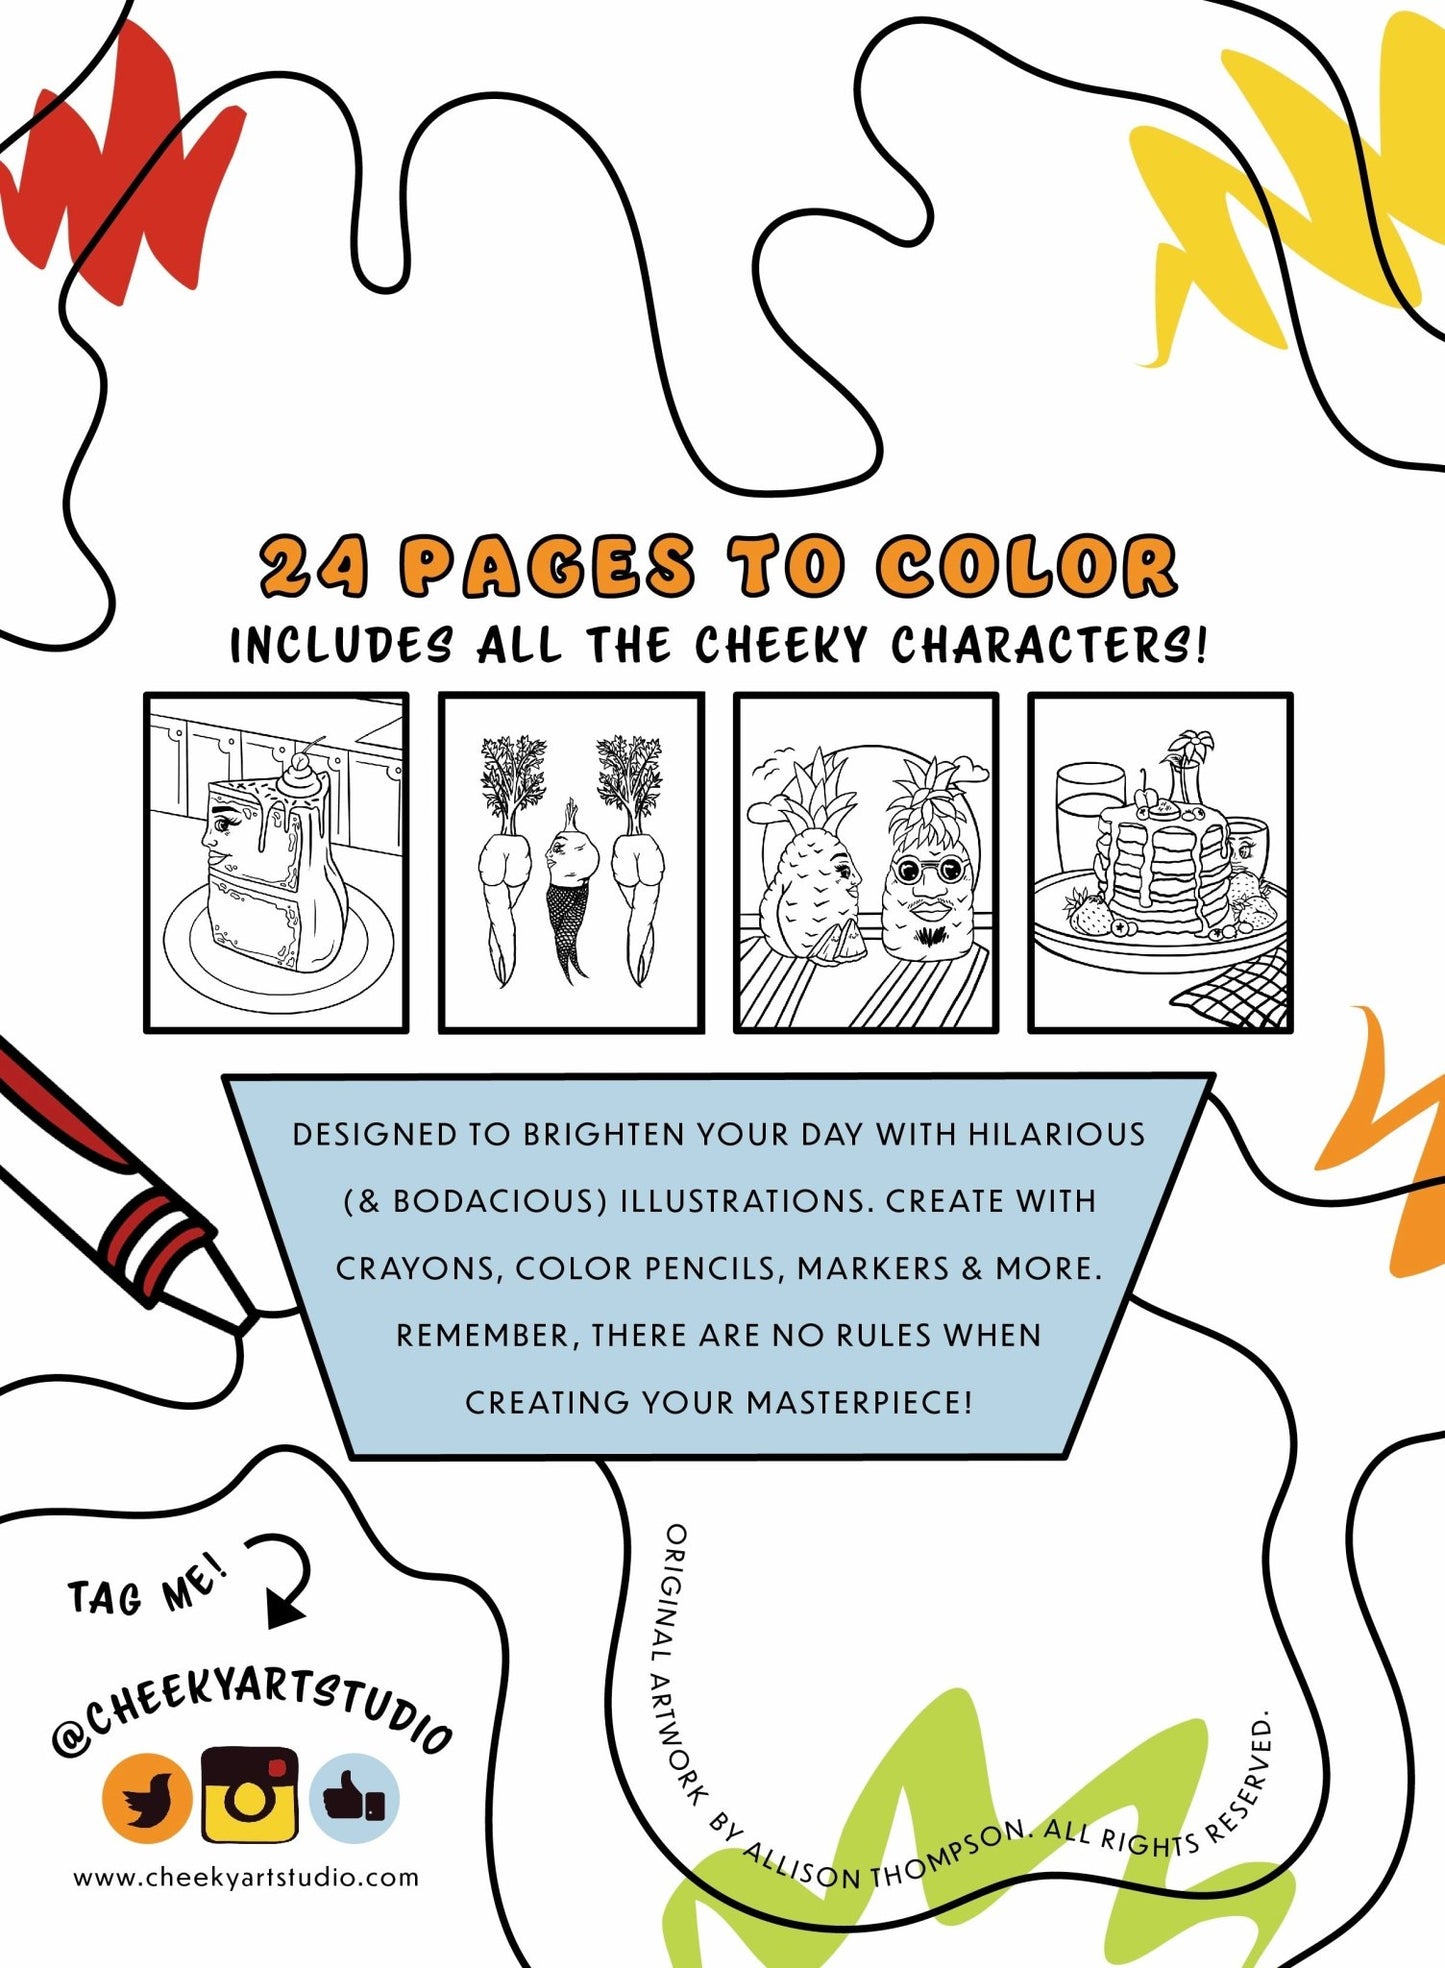 Print At Home! Foodie Booties Adult Coloring Book - Cheeky Art Studio-allison thompson-allisthompson-Apple